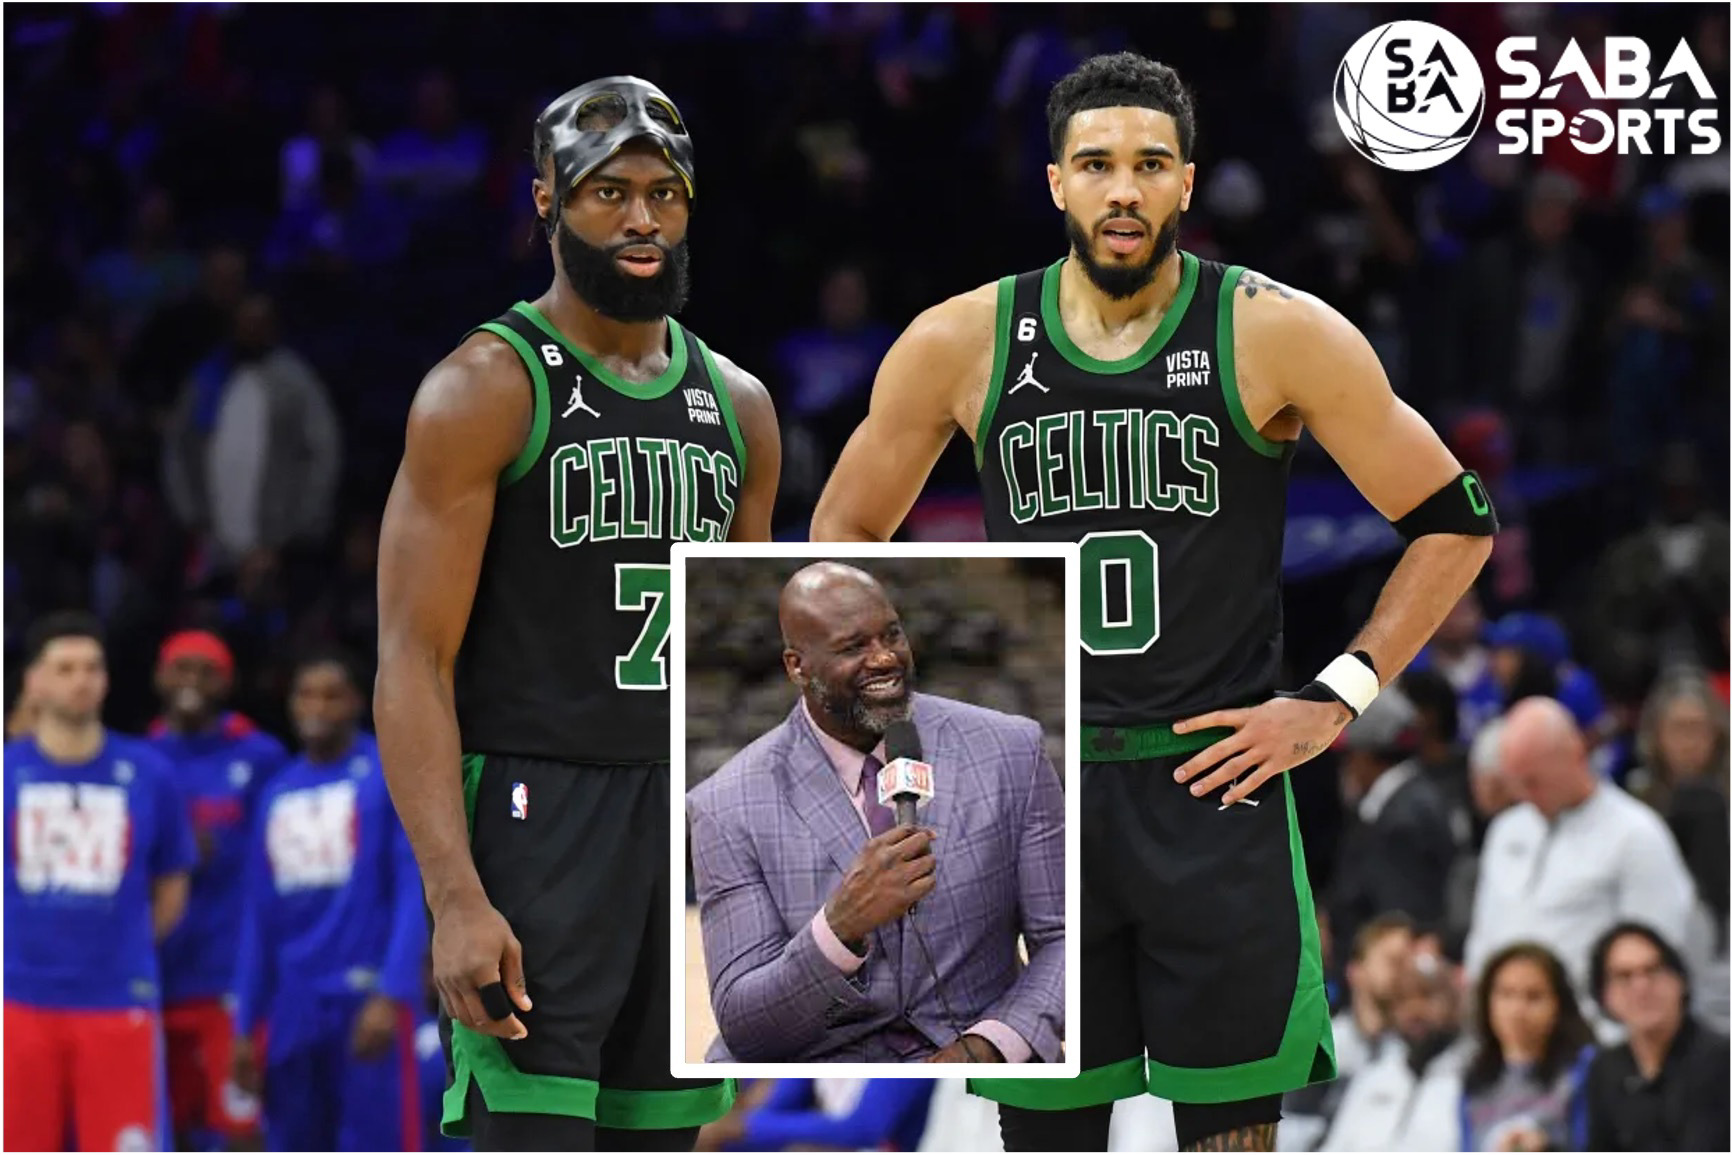 Shaquille O'Neal Boston Celtics NBA Fan Apparel & Souvenirs for sale